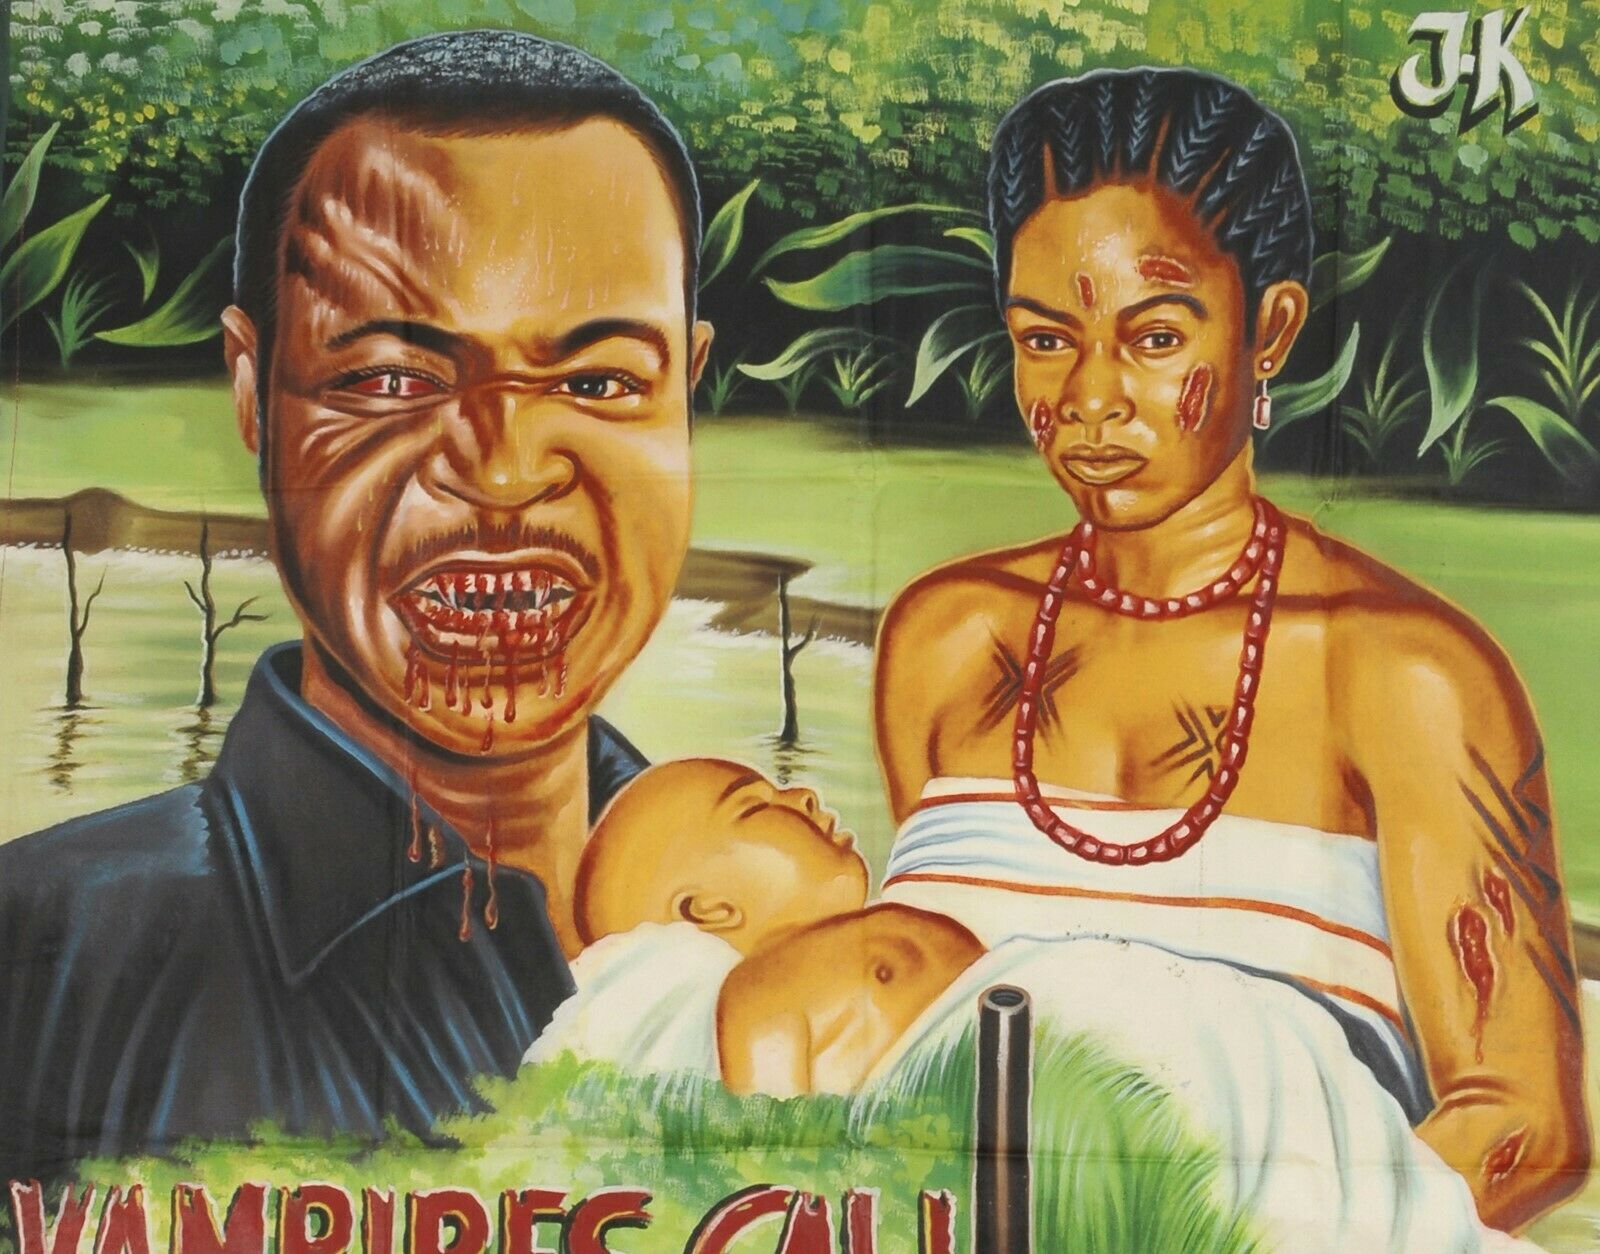 Movie Cinema poster Ghana African oil paint Hand painting Juju VAMPIRES CALL 2 - Tribalgh